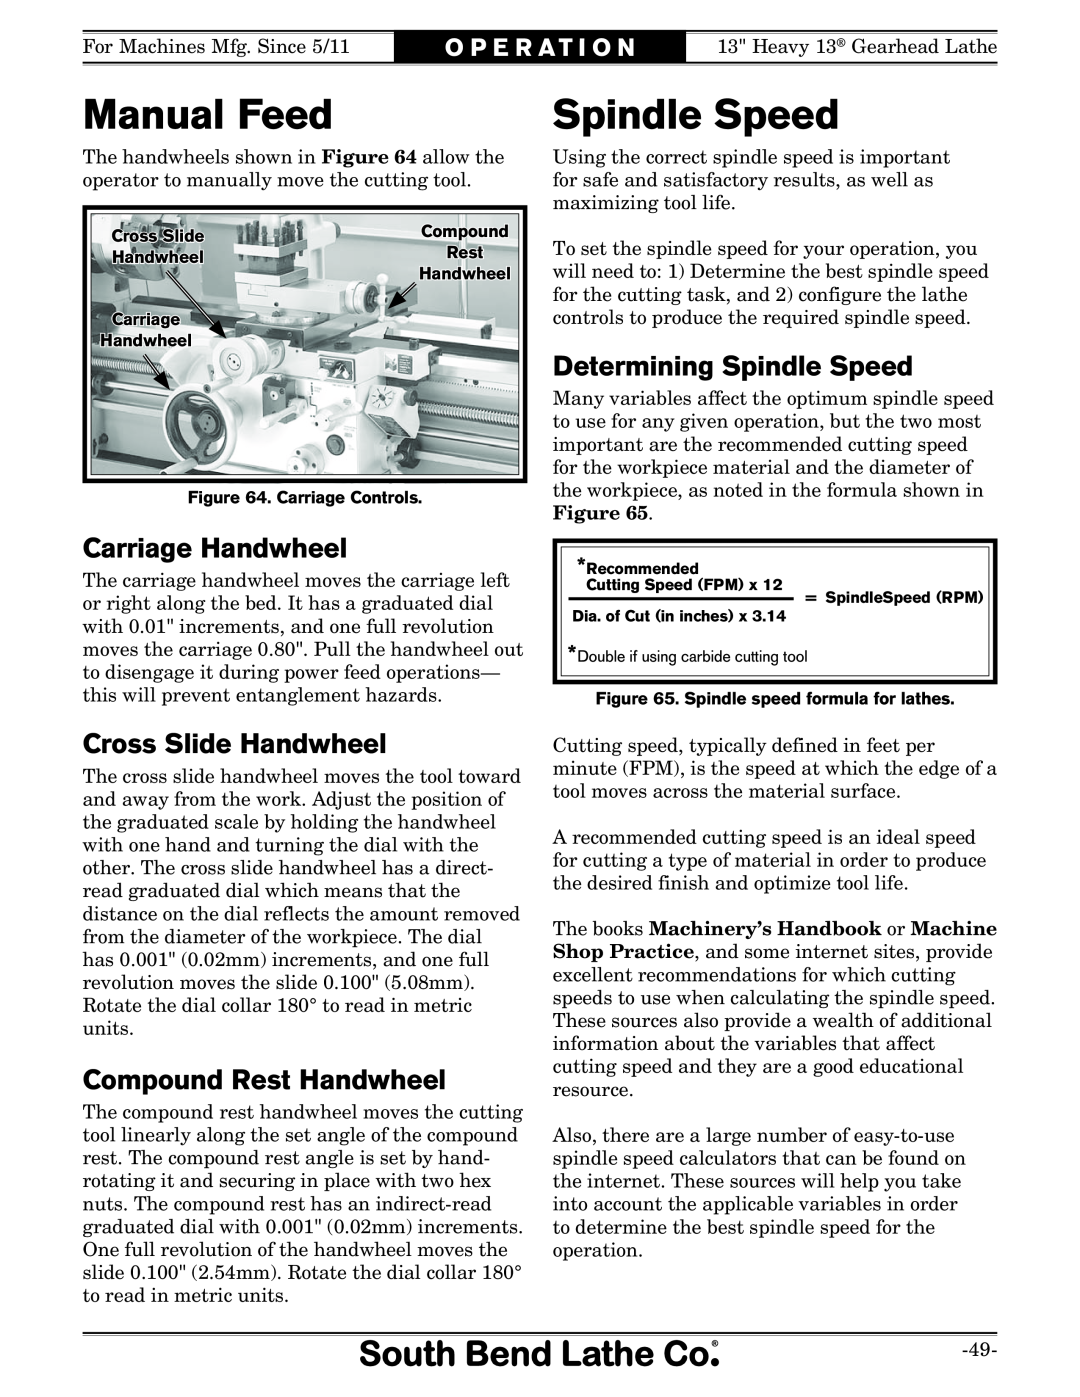 Southbend SB owner manual Manual Feed, Spindle Speed, Carriage Handwheel, Cross Slide Handwheel, Compound Rest Handwheel 